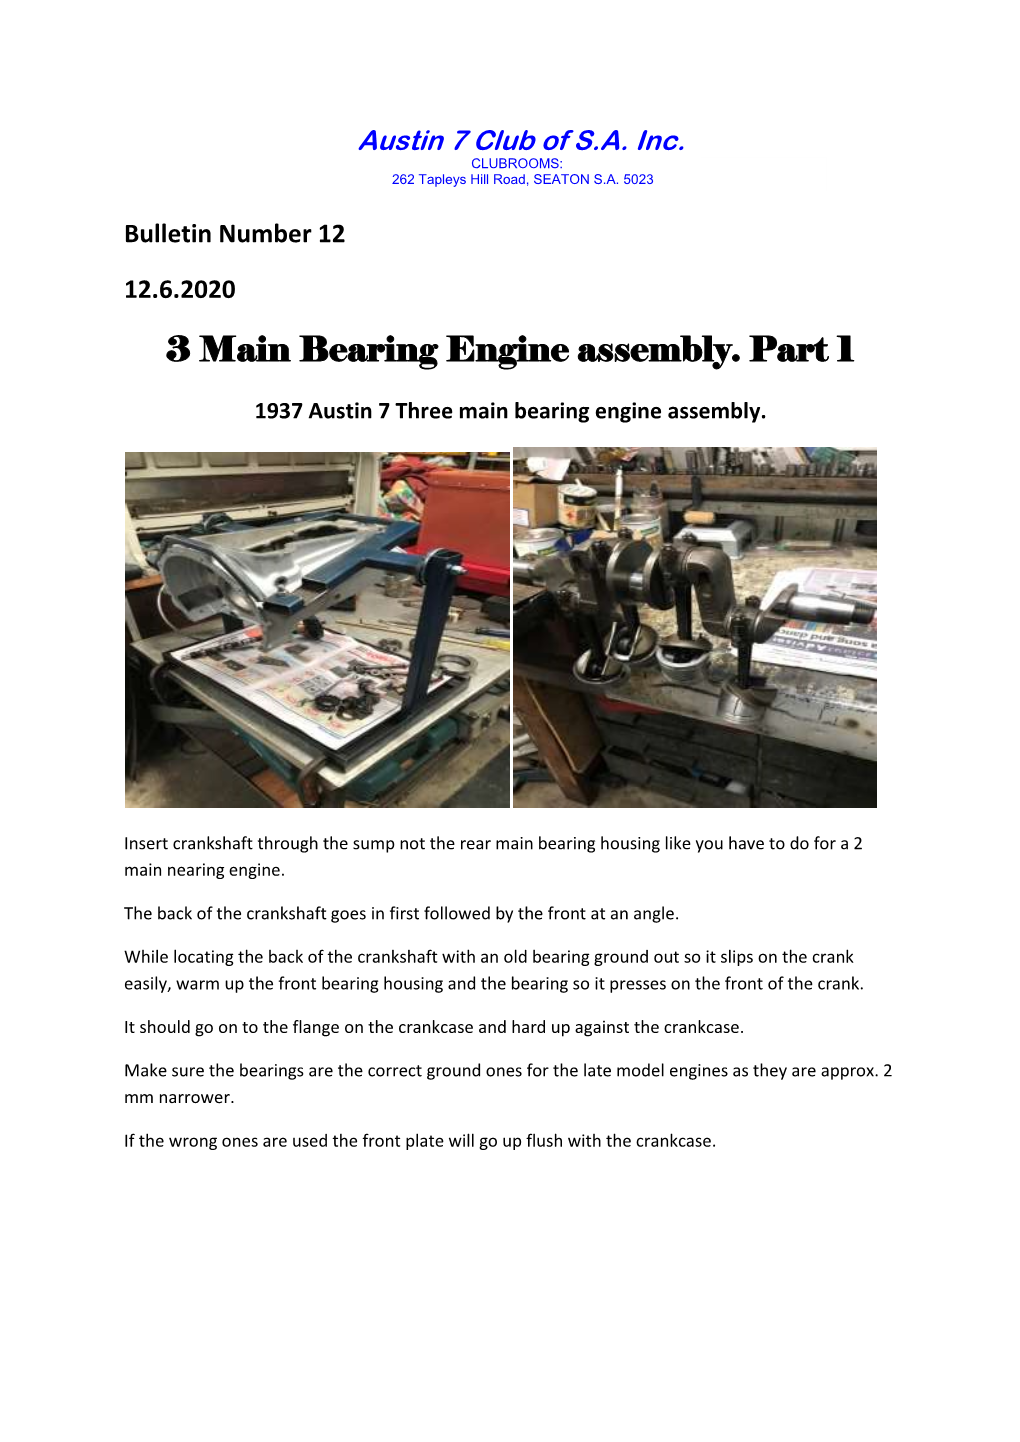 3 Main Bearing Engine Assembly. Part 1